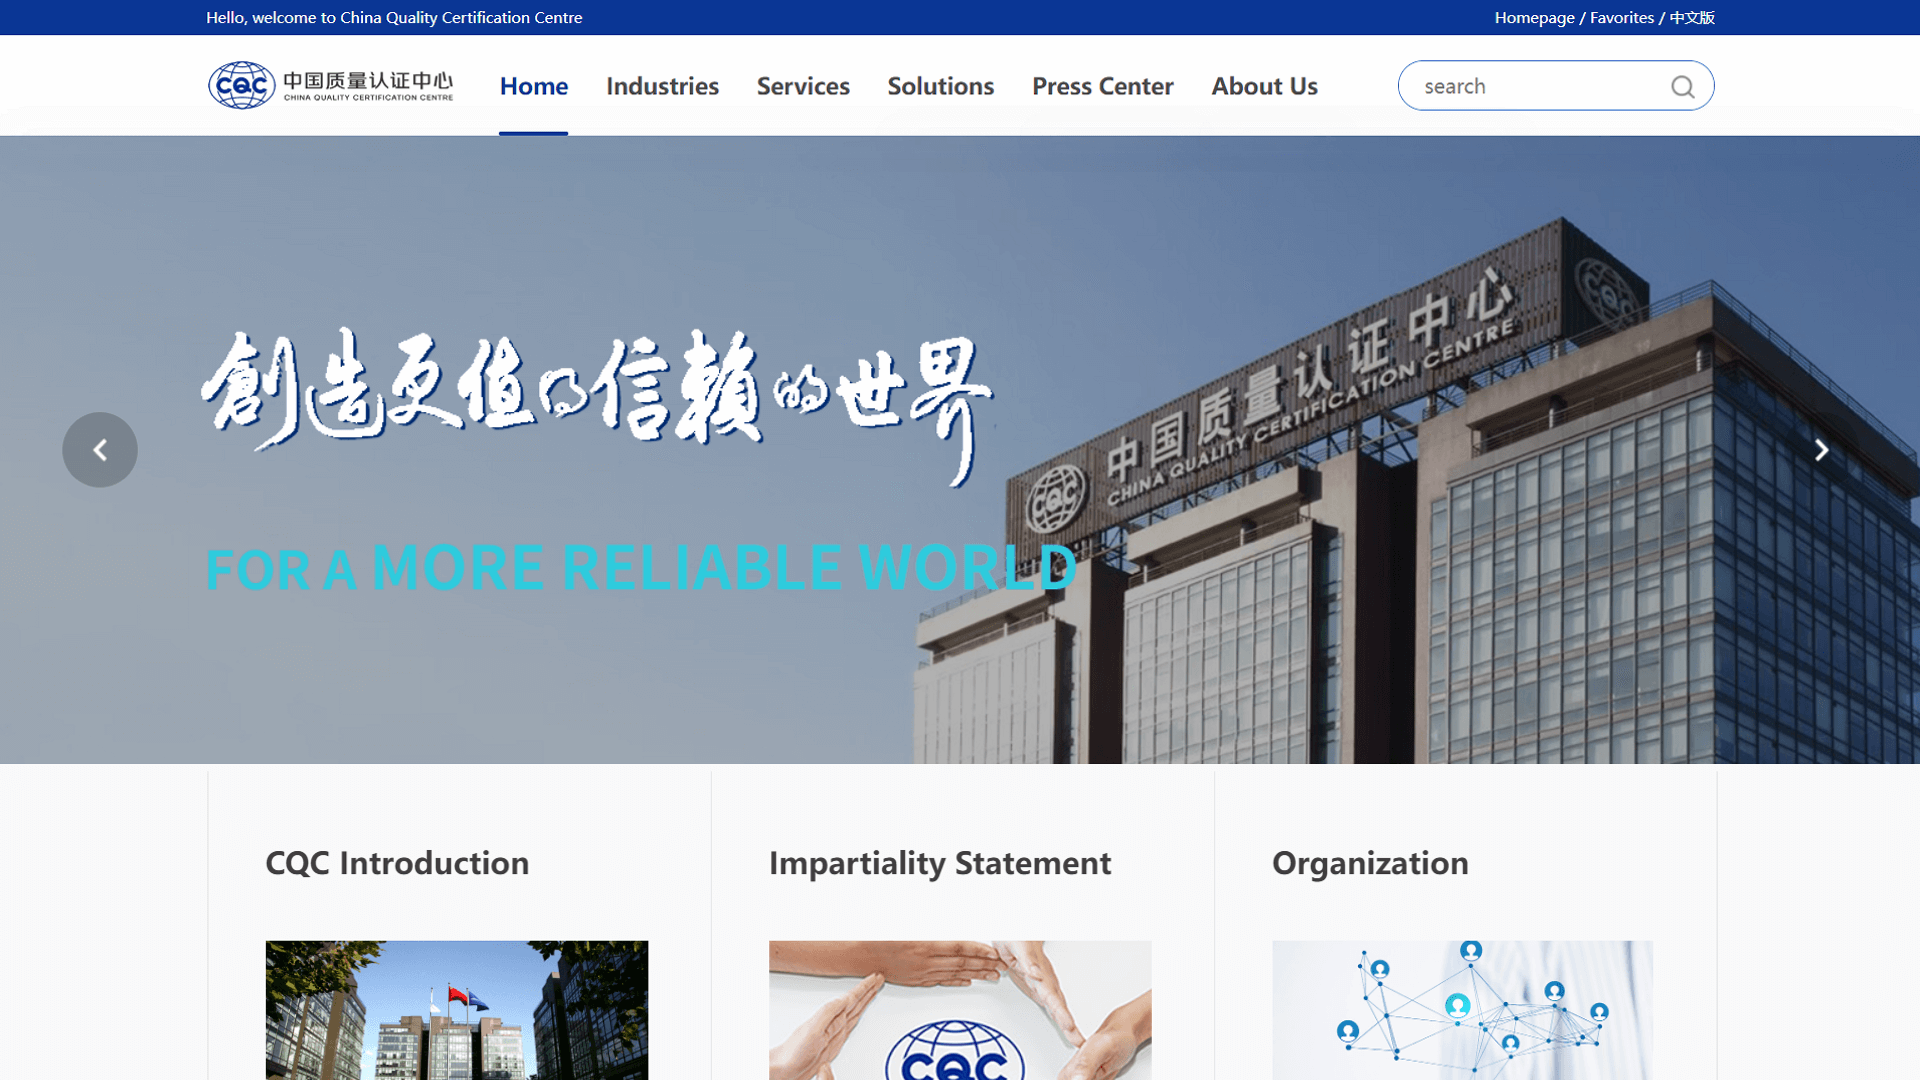 China Quality Certification Center (CQC) Website